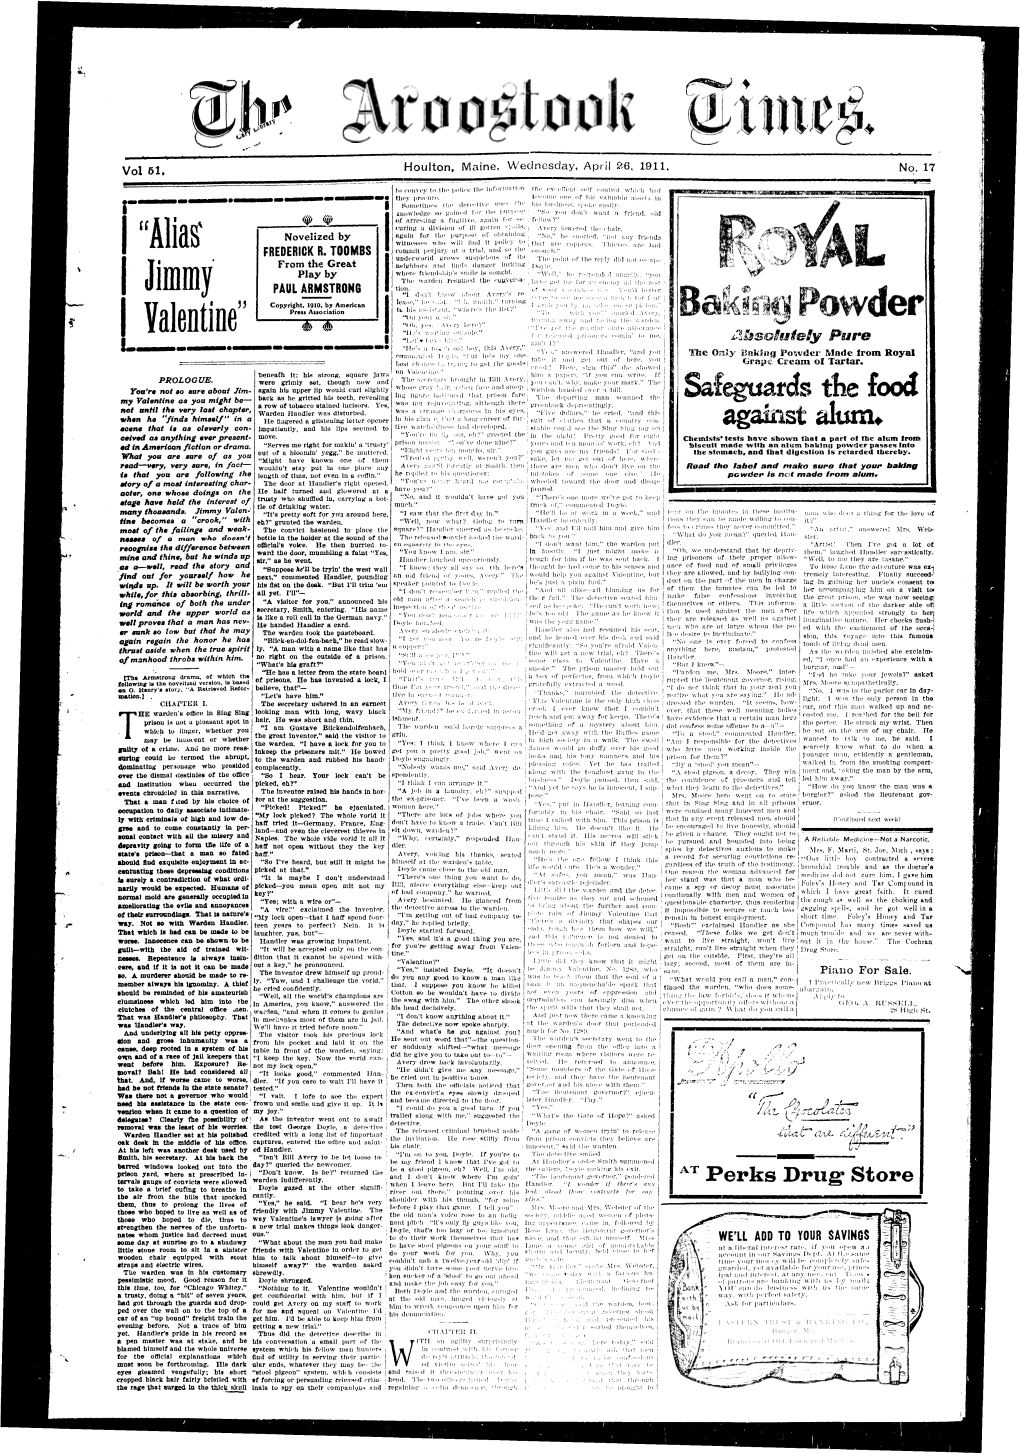 The Aroostook Times, April 26, 1911